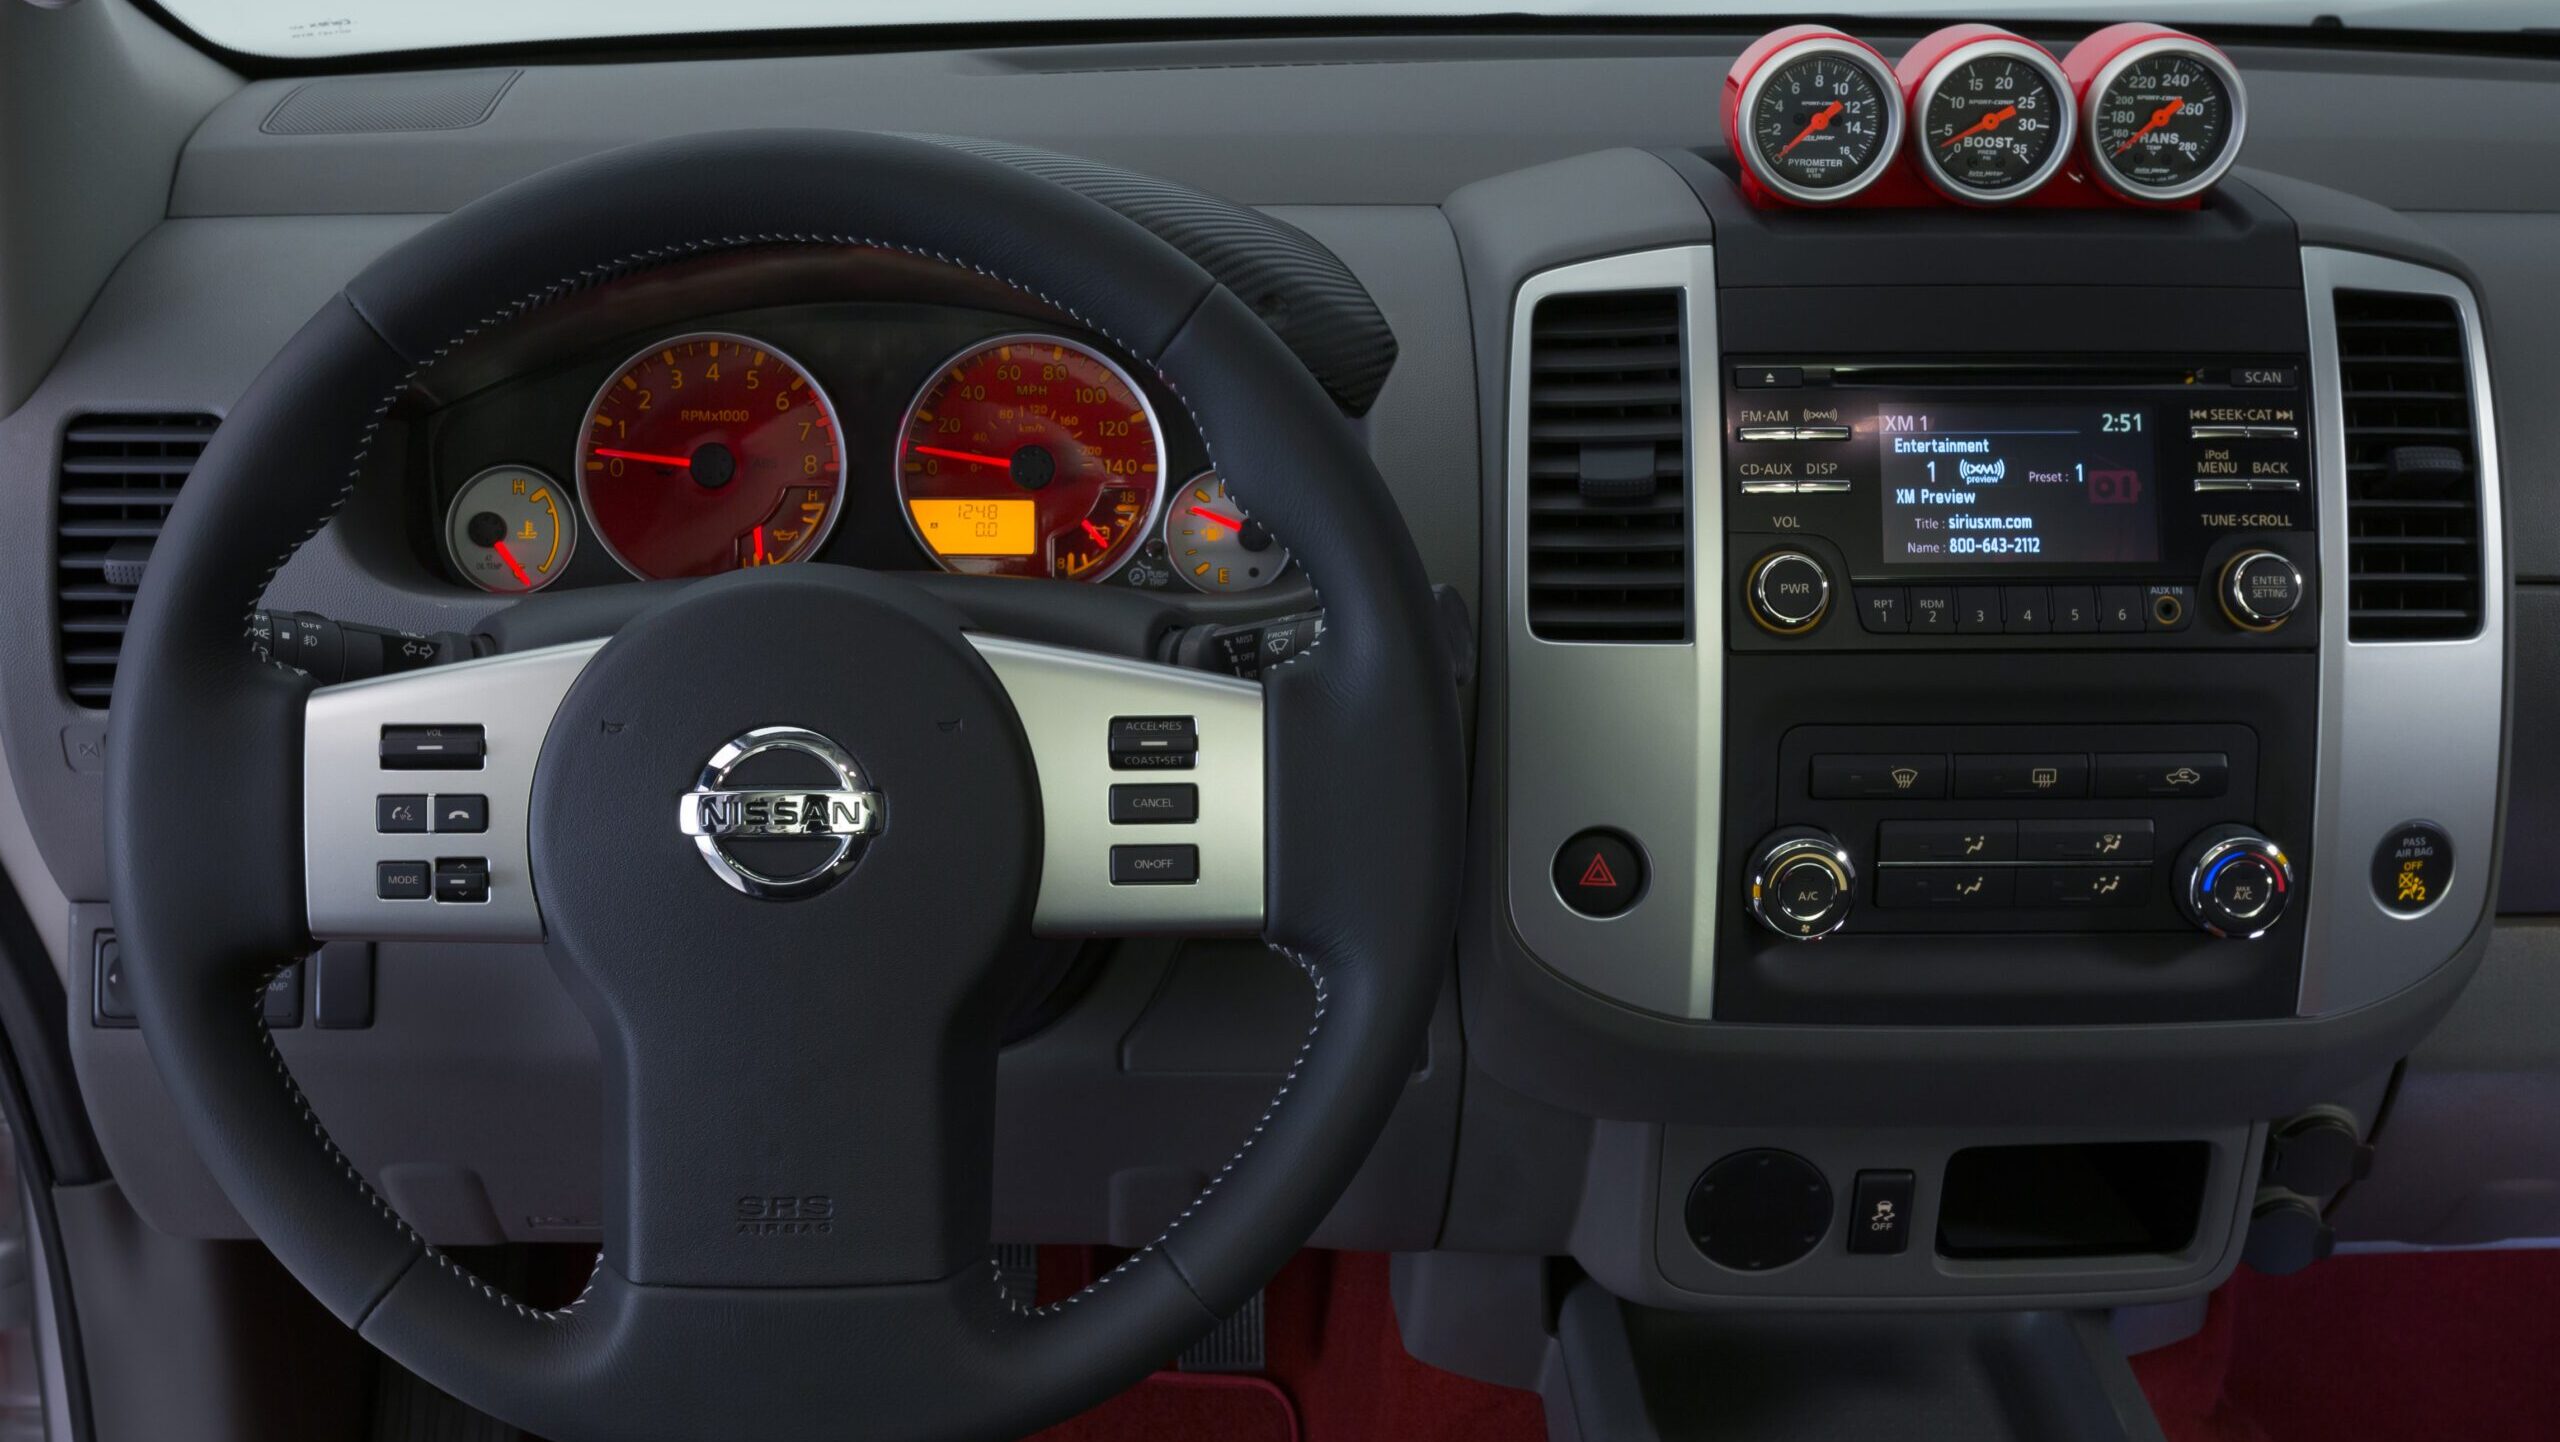 2015 Nissan Frontier Cummins Concept interior